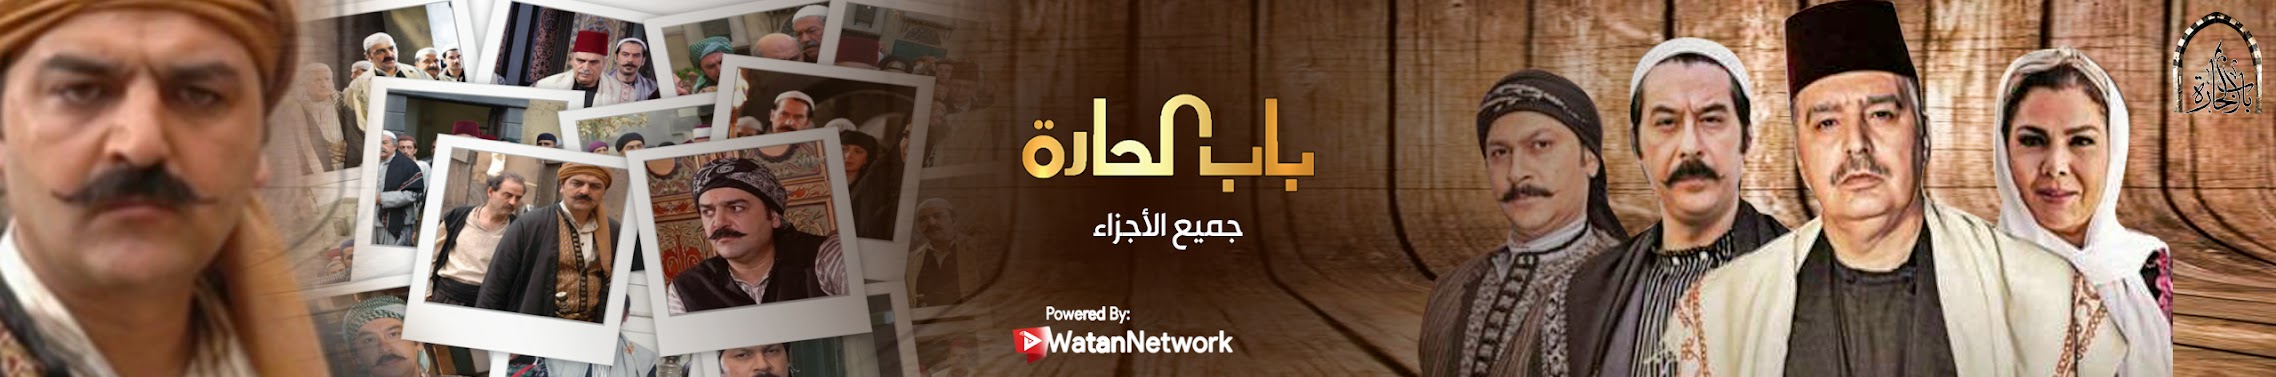 Bab Alhara _ باب الحارة جميع الاجزاء YouTube Channel Analytics and Report -  Powered by NoxInfluencer Mobile